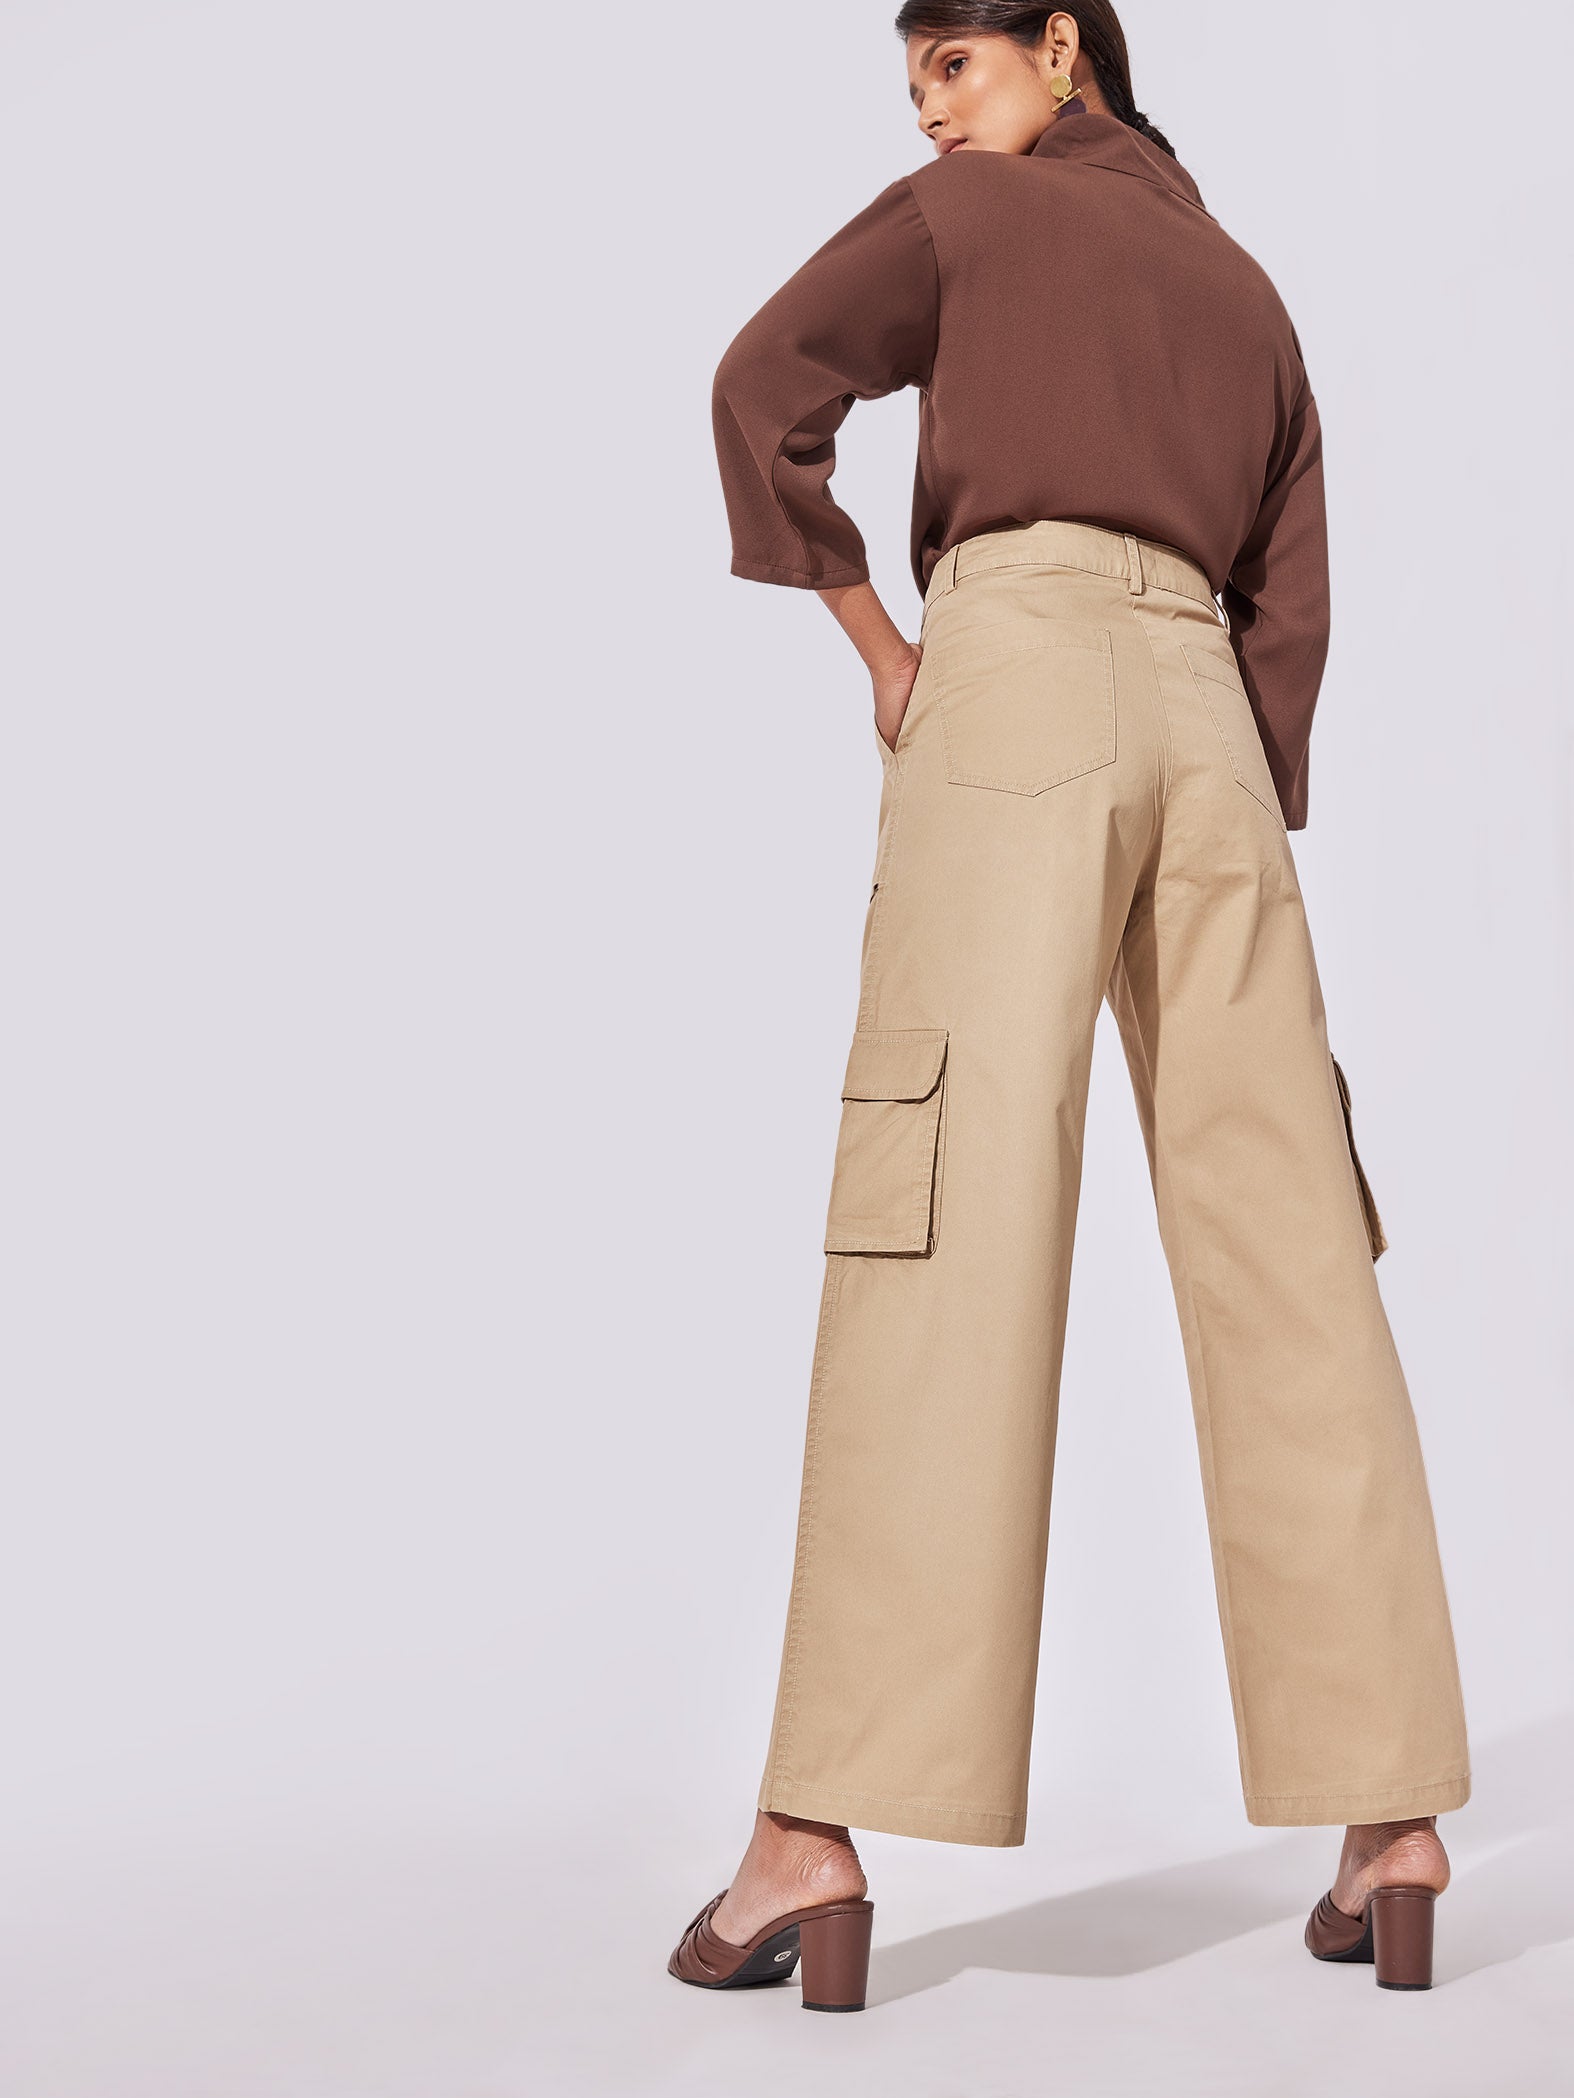 Buy Khaki Patch Pocket Cargo Pants Online  The Label Life